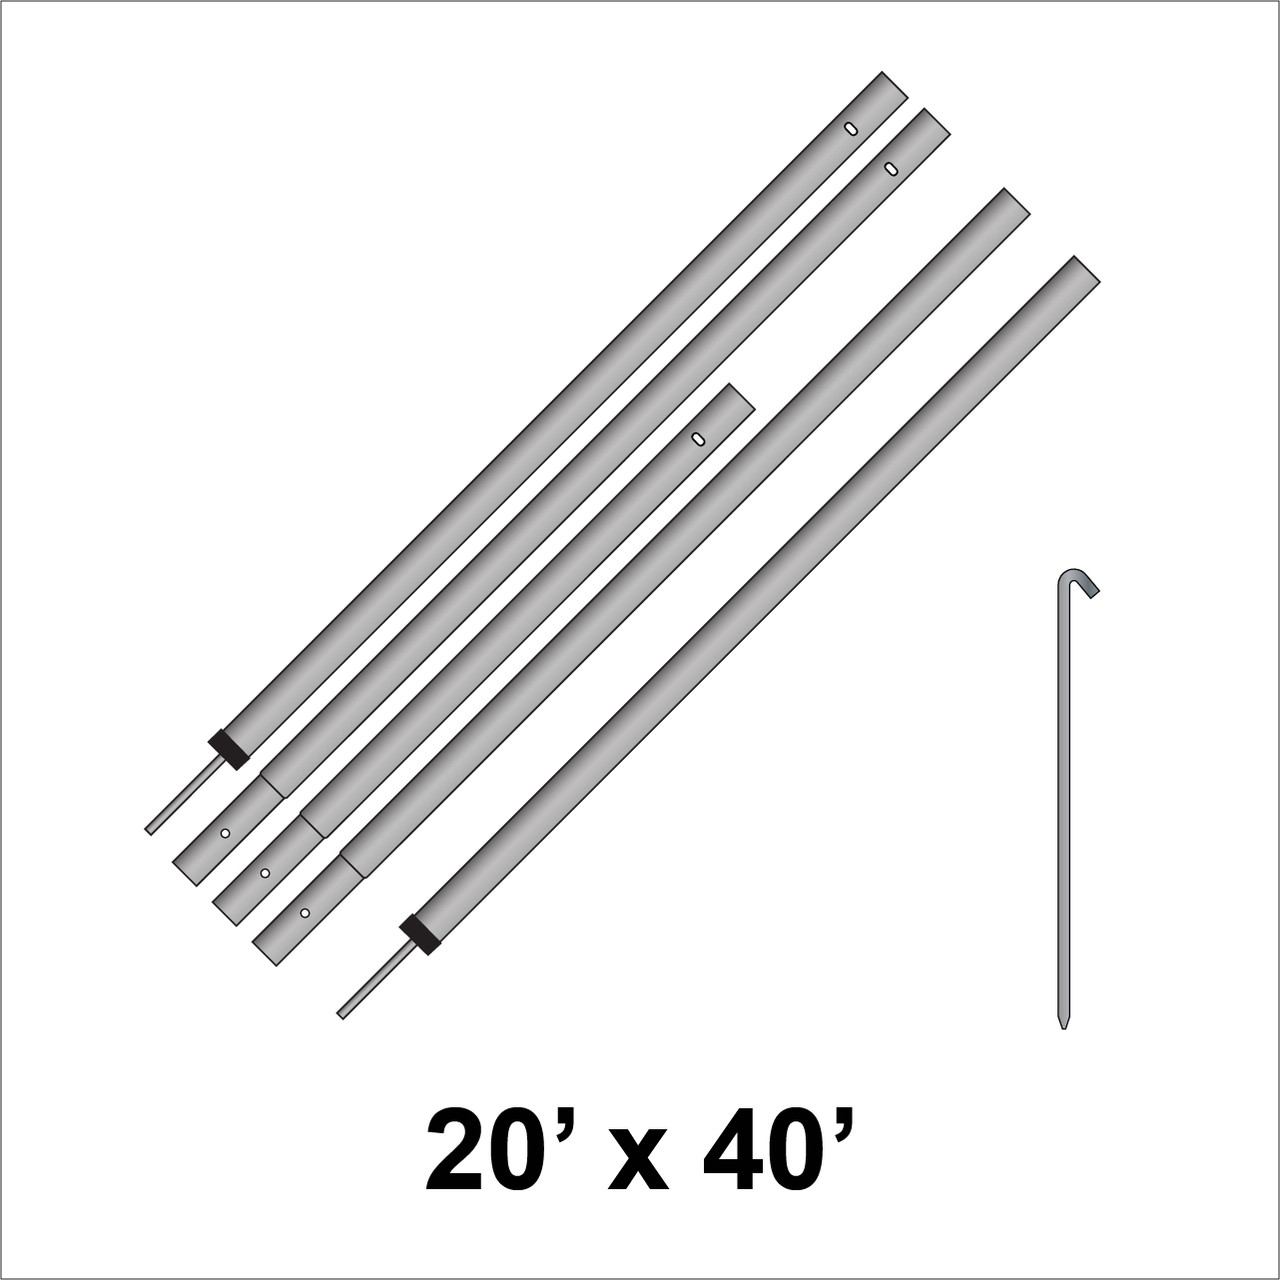 20' x 40' Presto Series Pole Canopy Kit